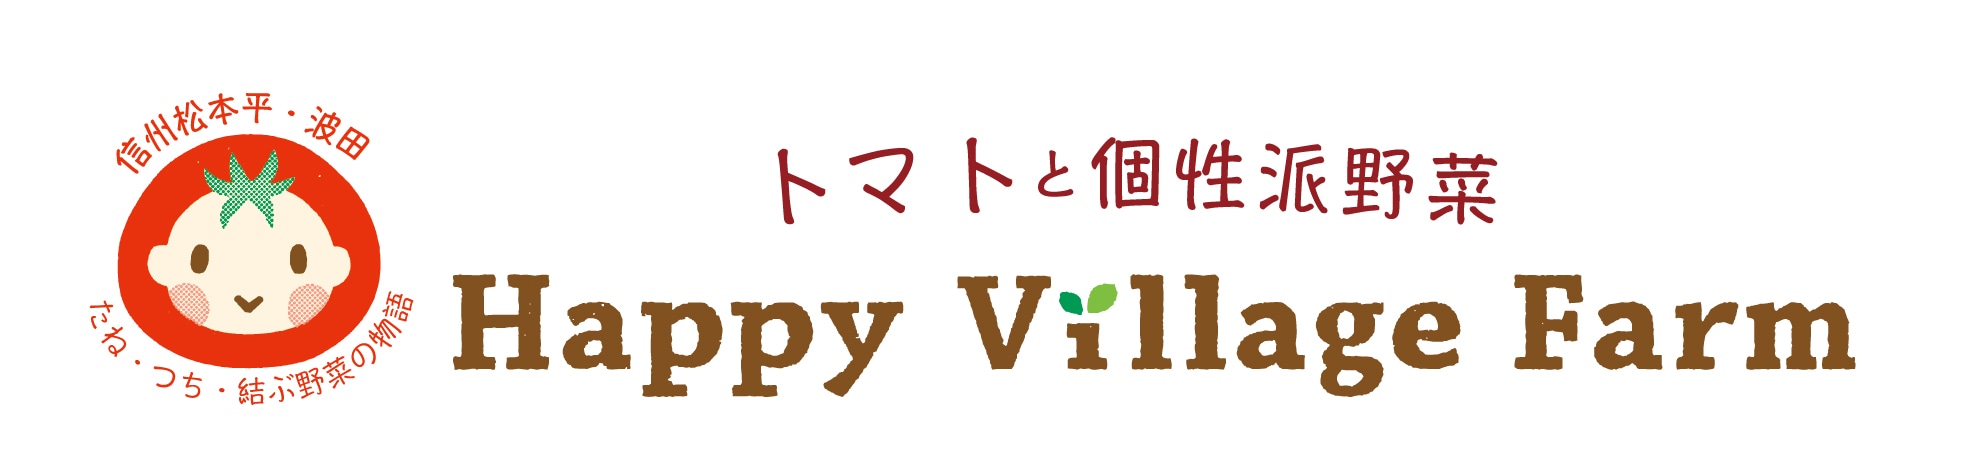 Happy Village Farm | トマトと個性派野菜